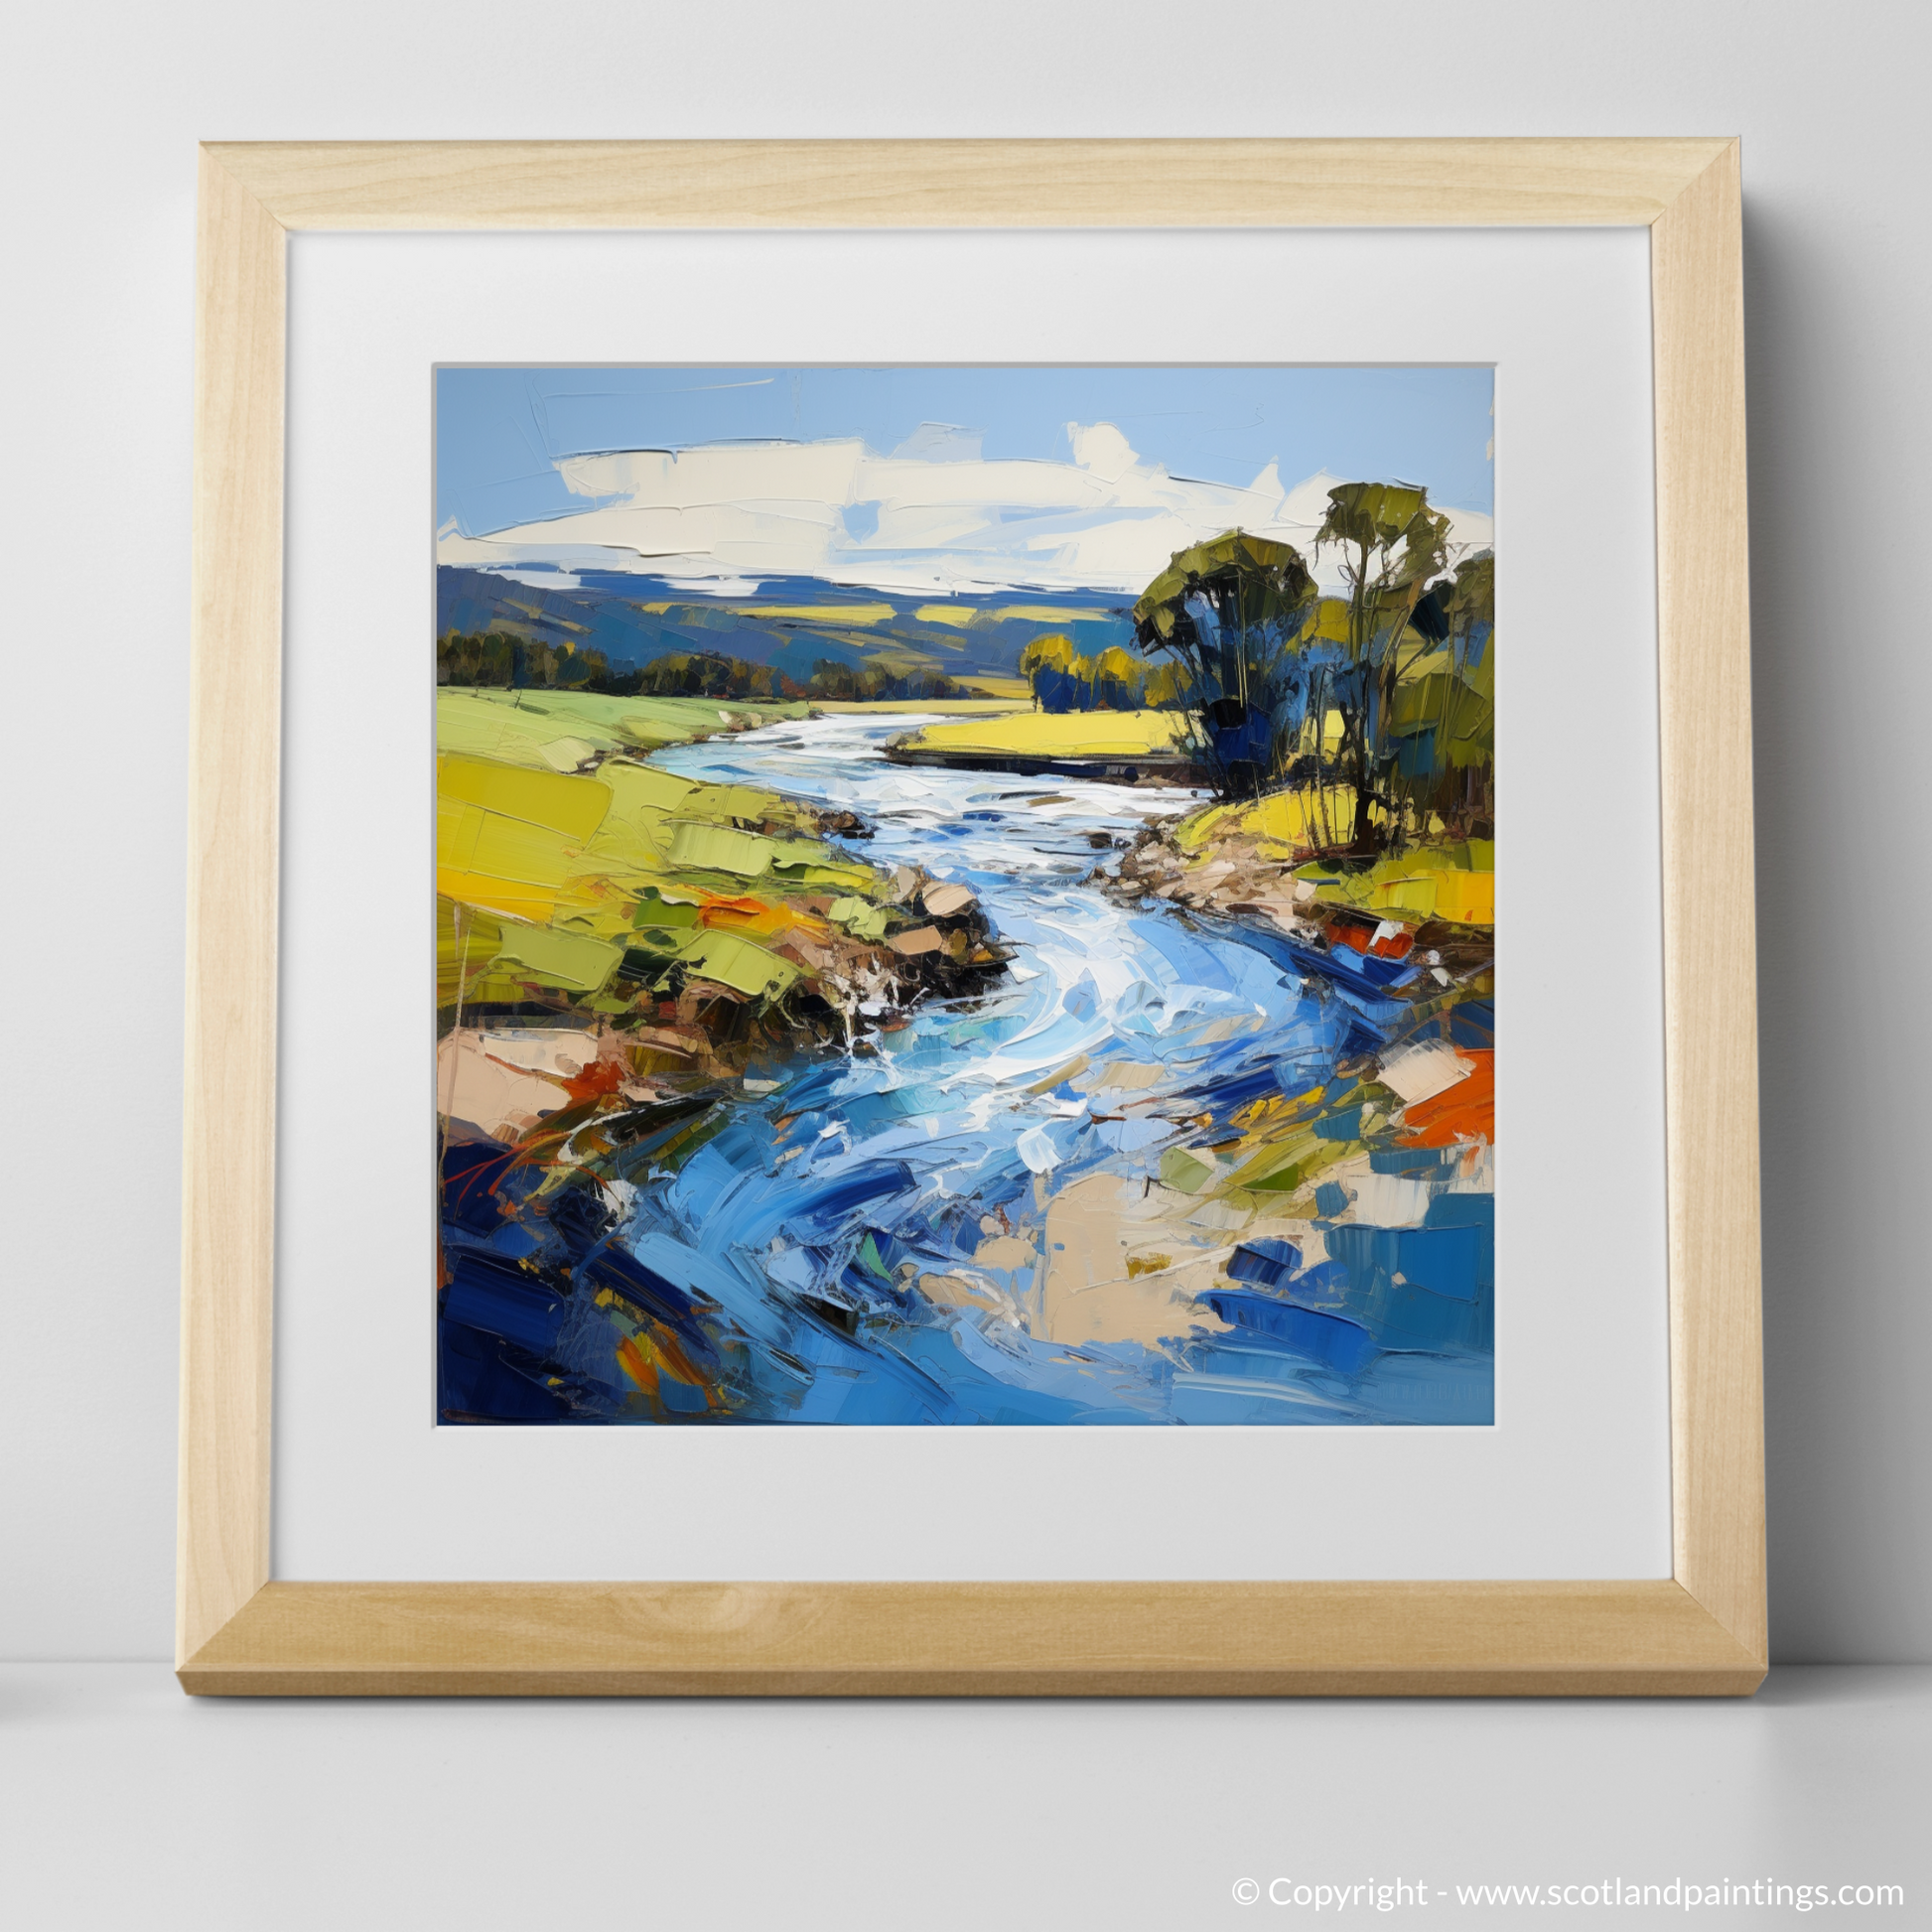 Art Print of River Deveron, Aberdeenshire with a natural frame